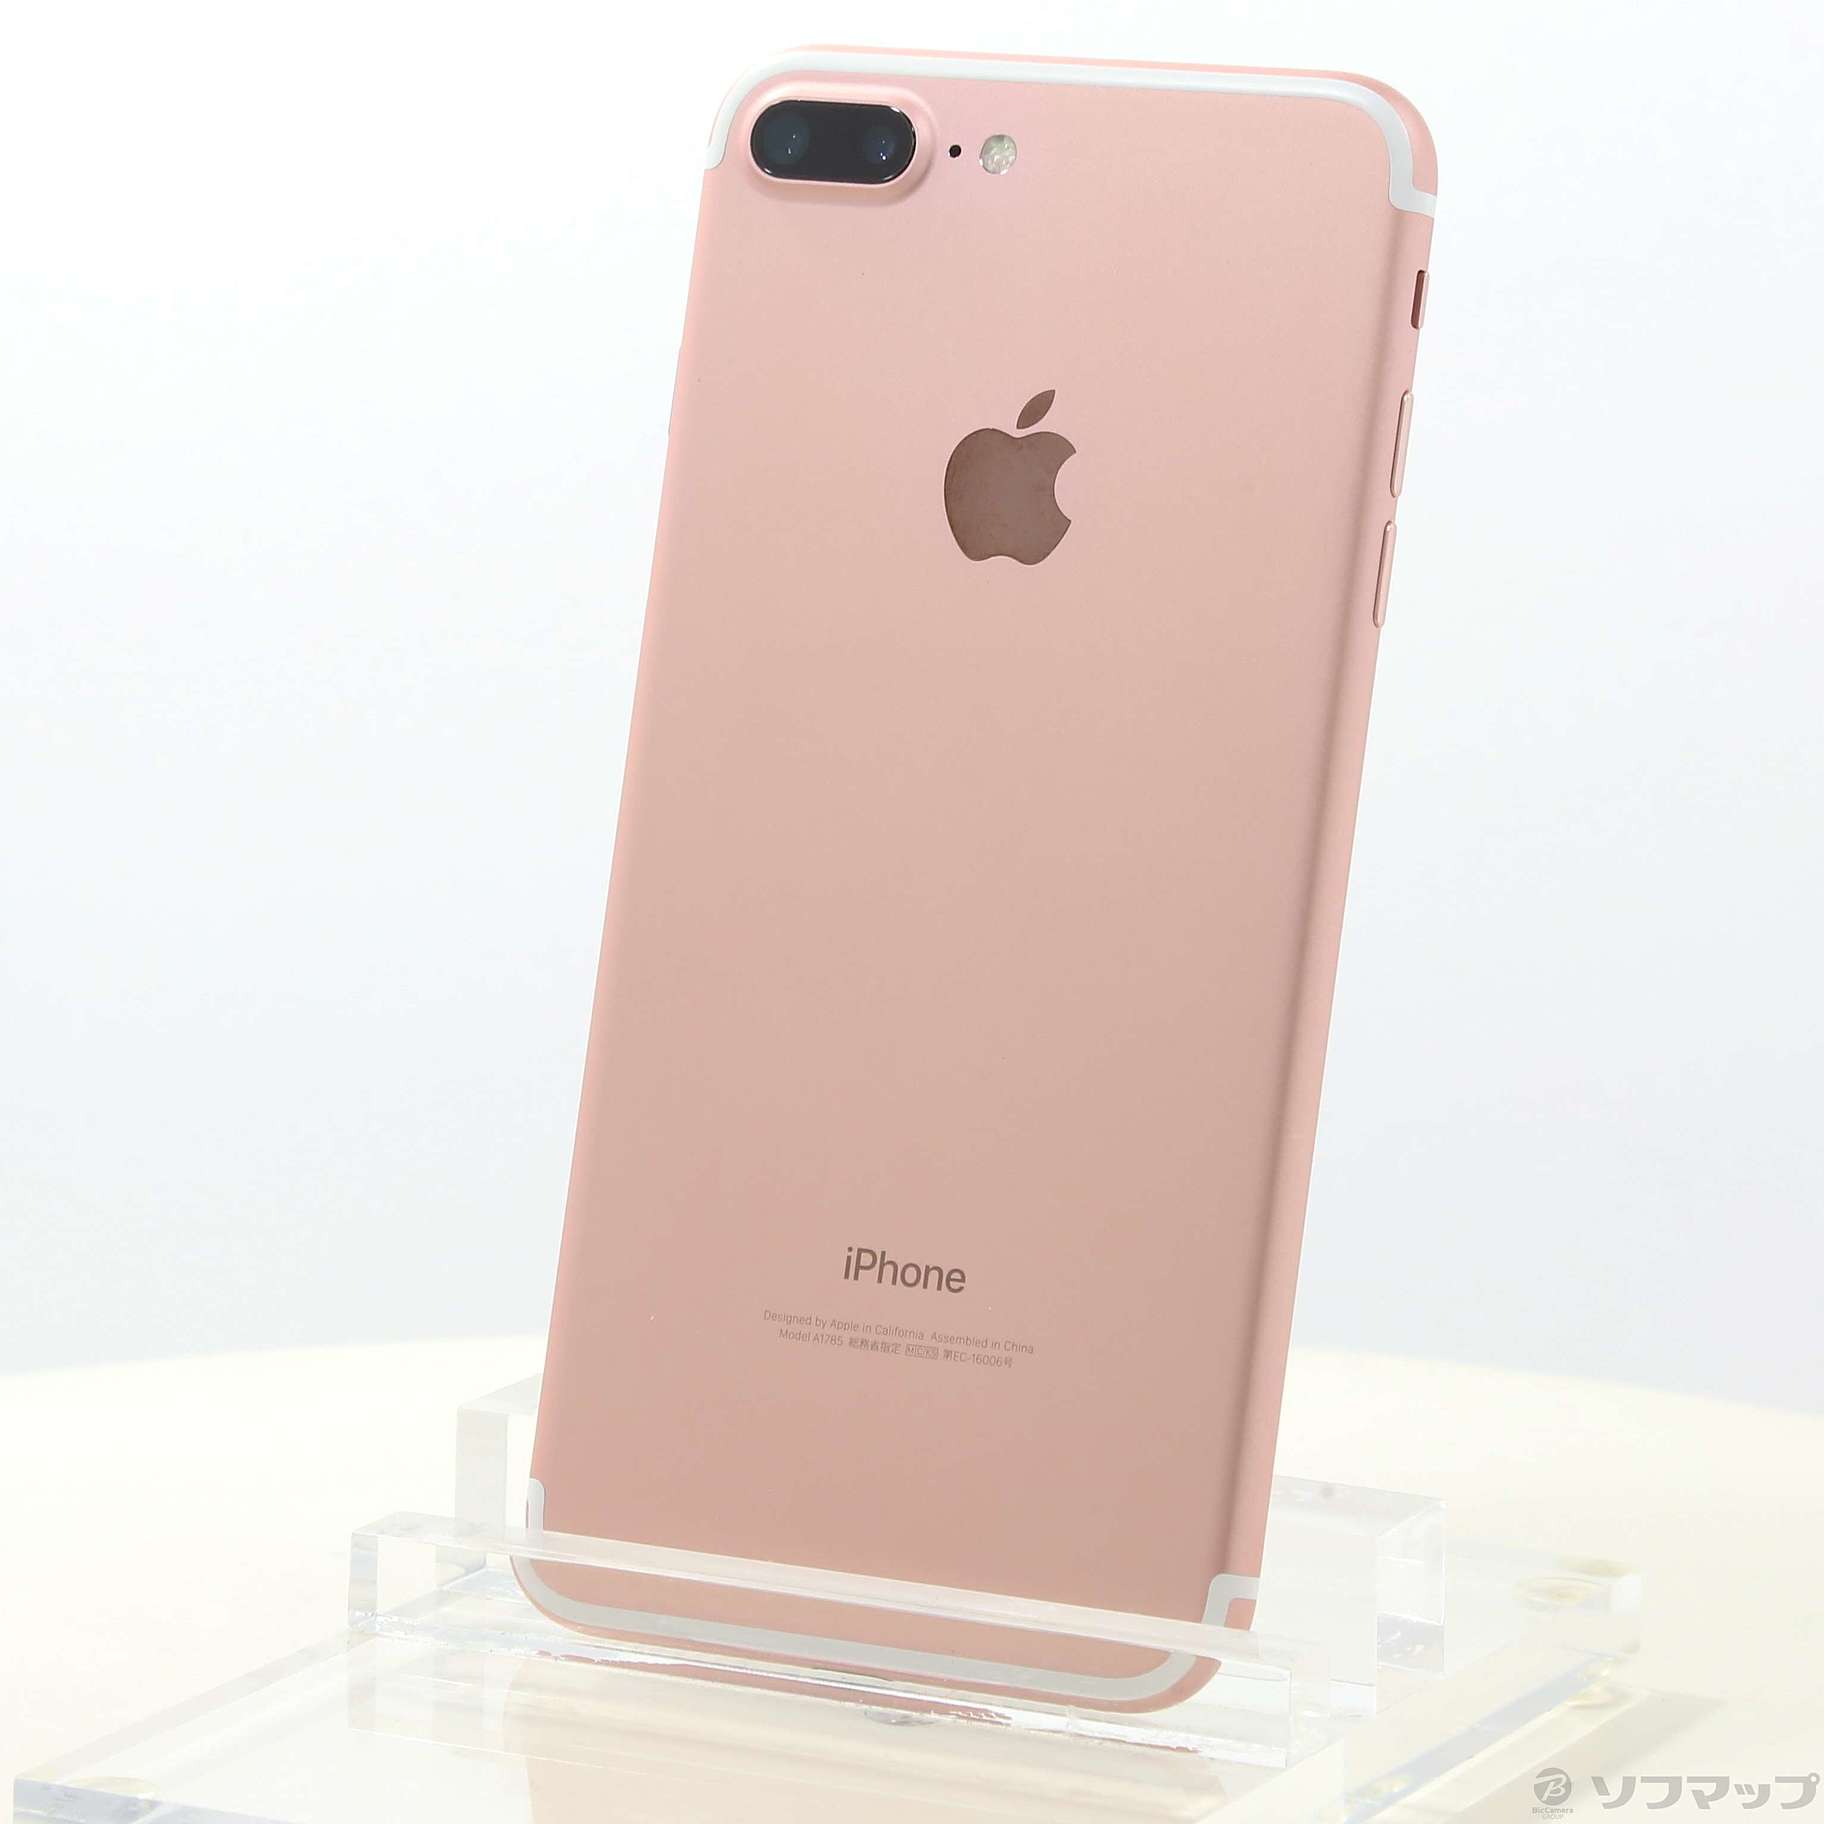 SIMフリー】iPhone 7 128GB Rose Gold-